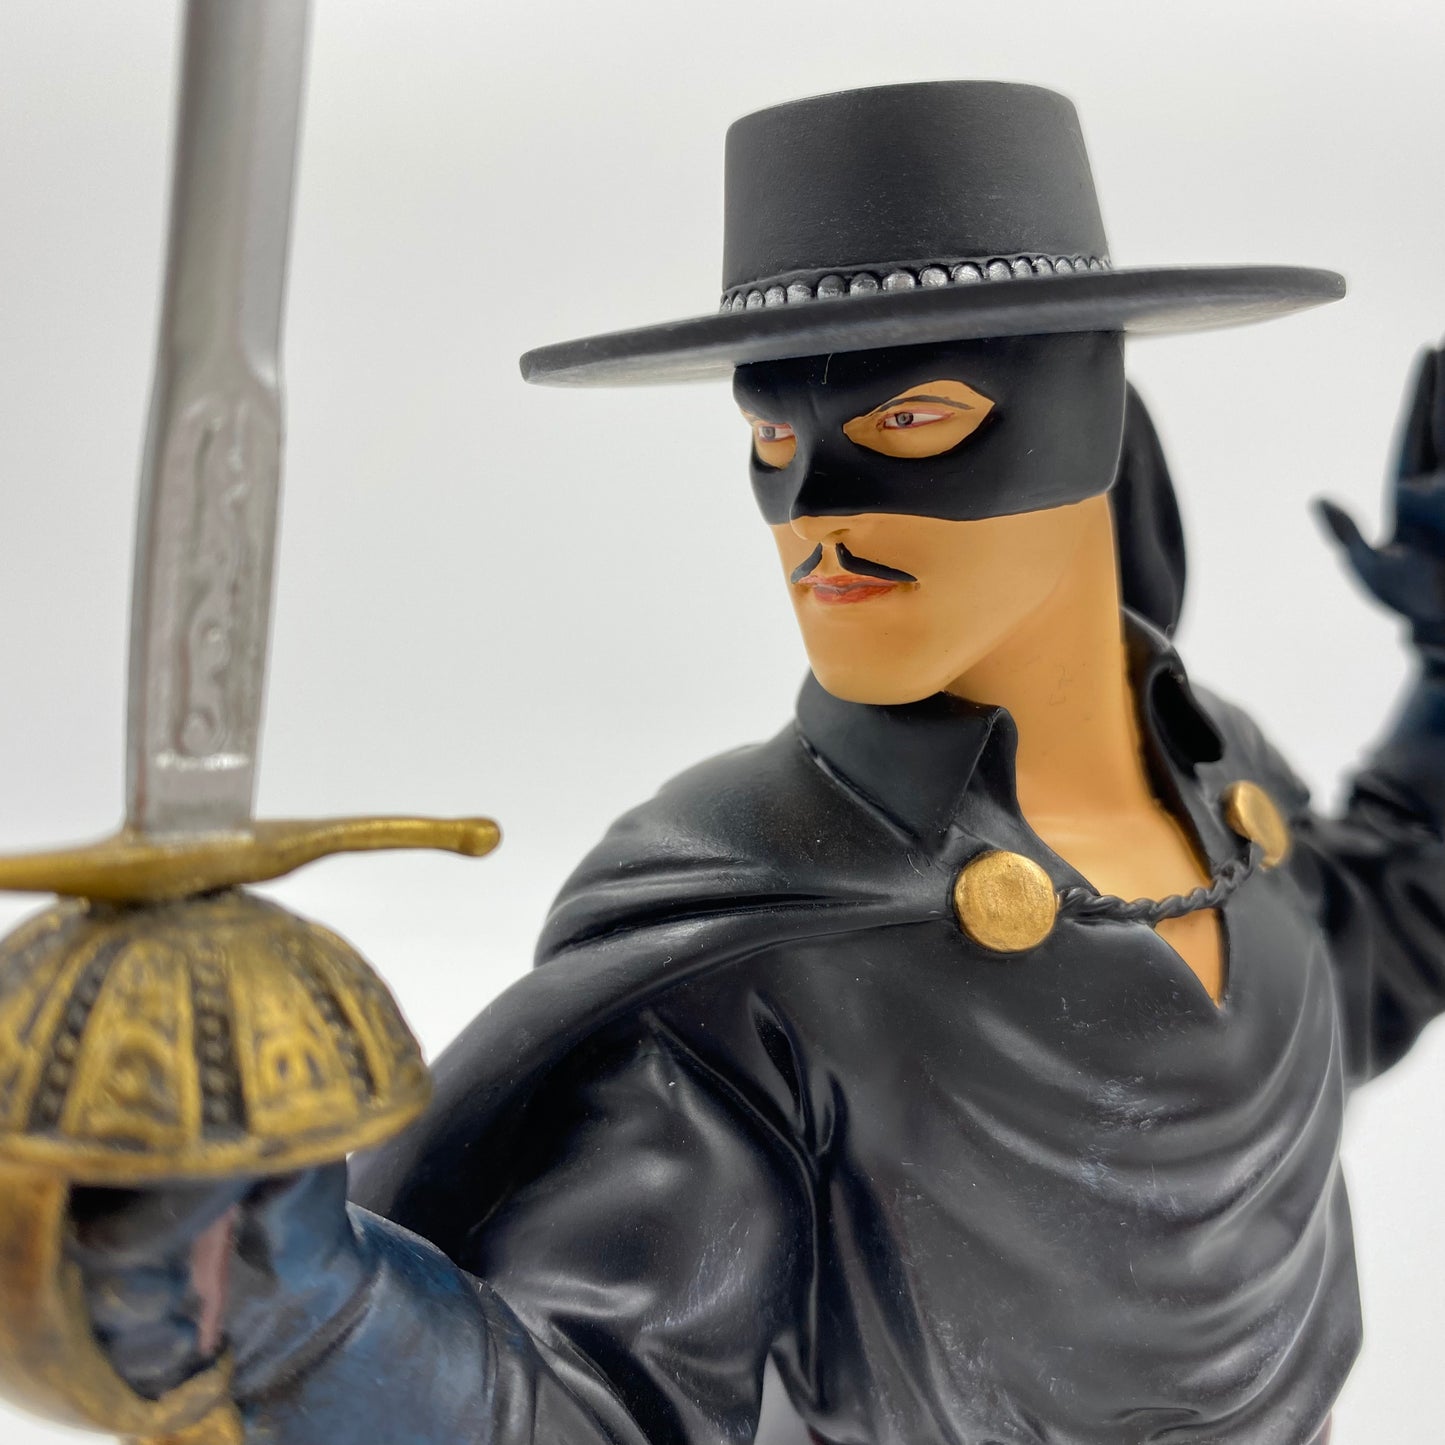 Zorro mini-bust (2003) Bowen Designs